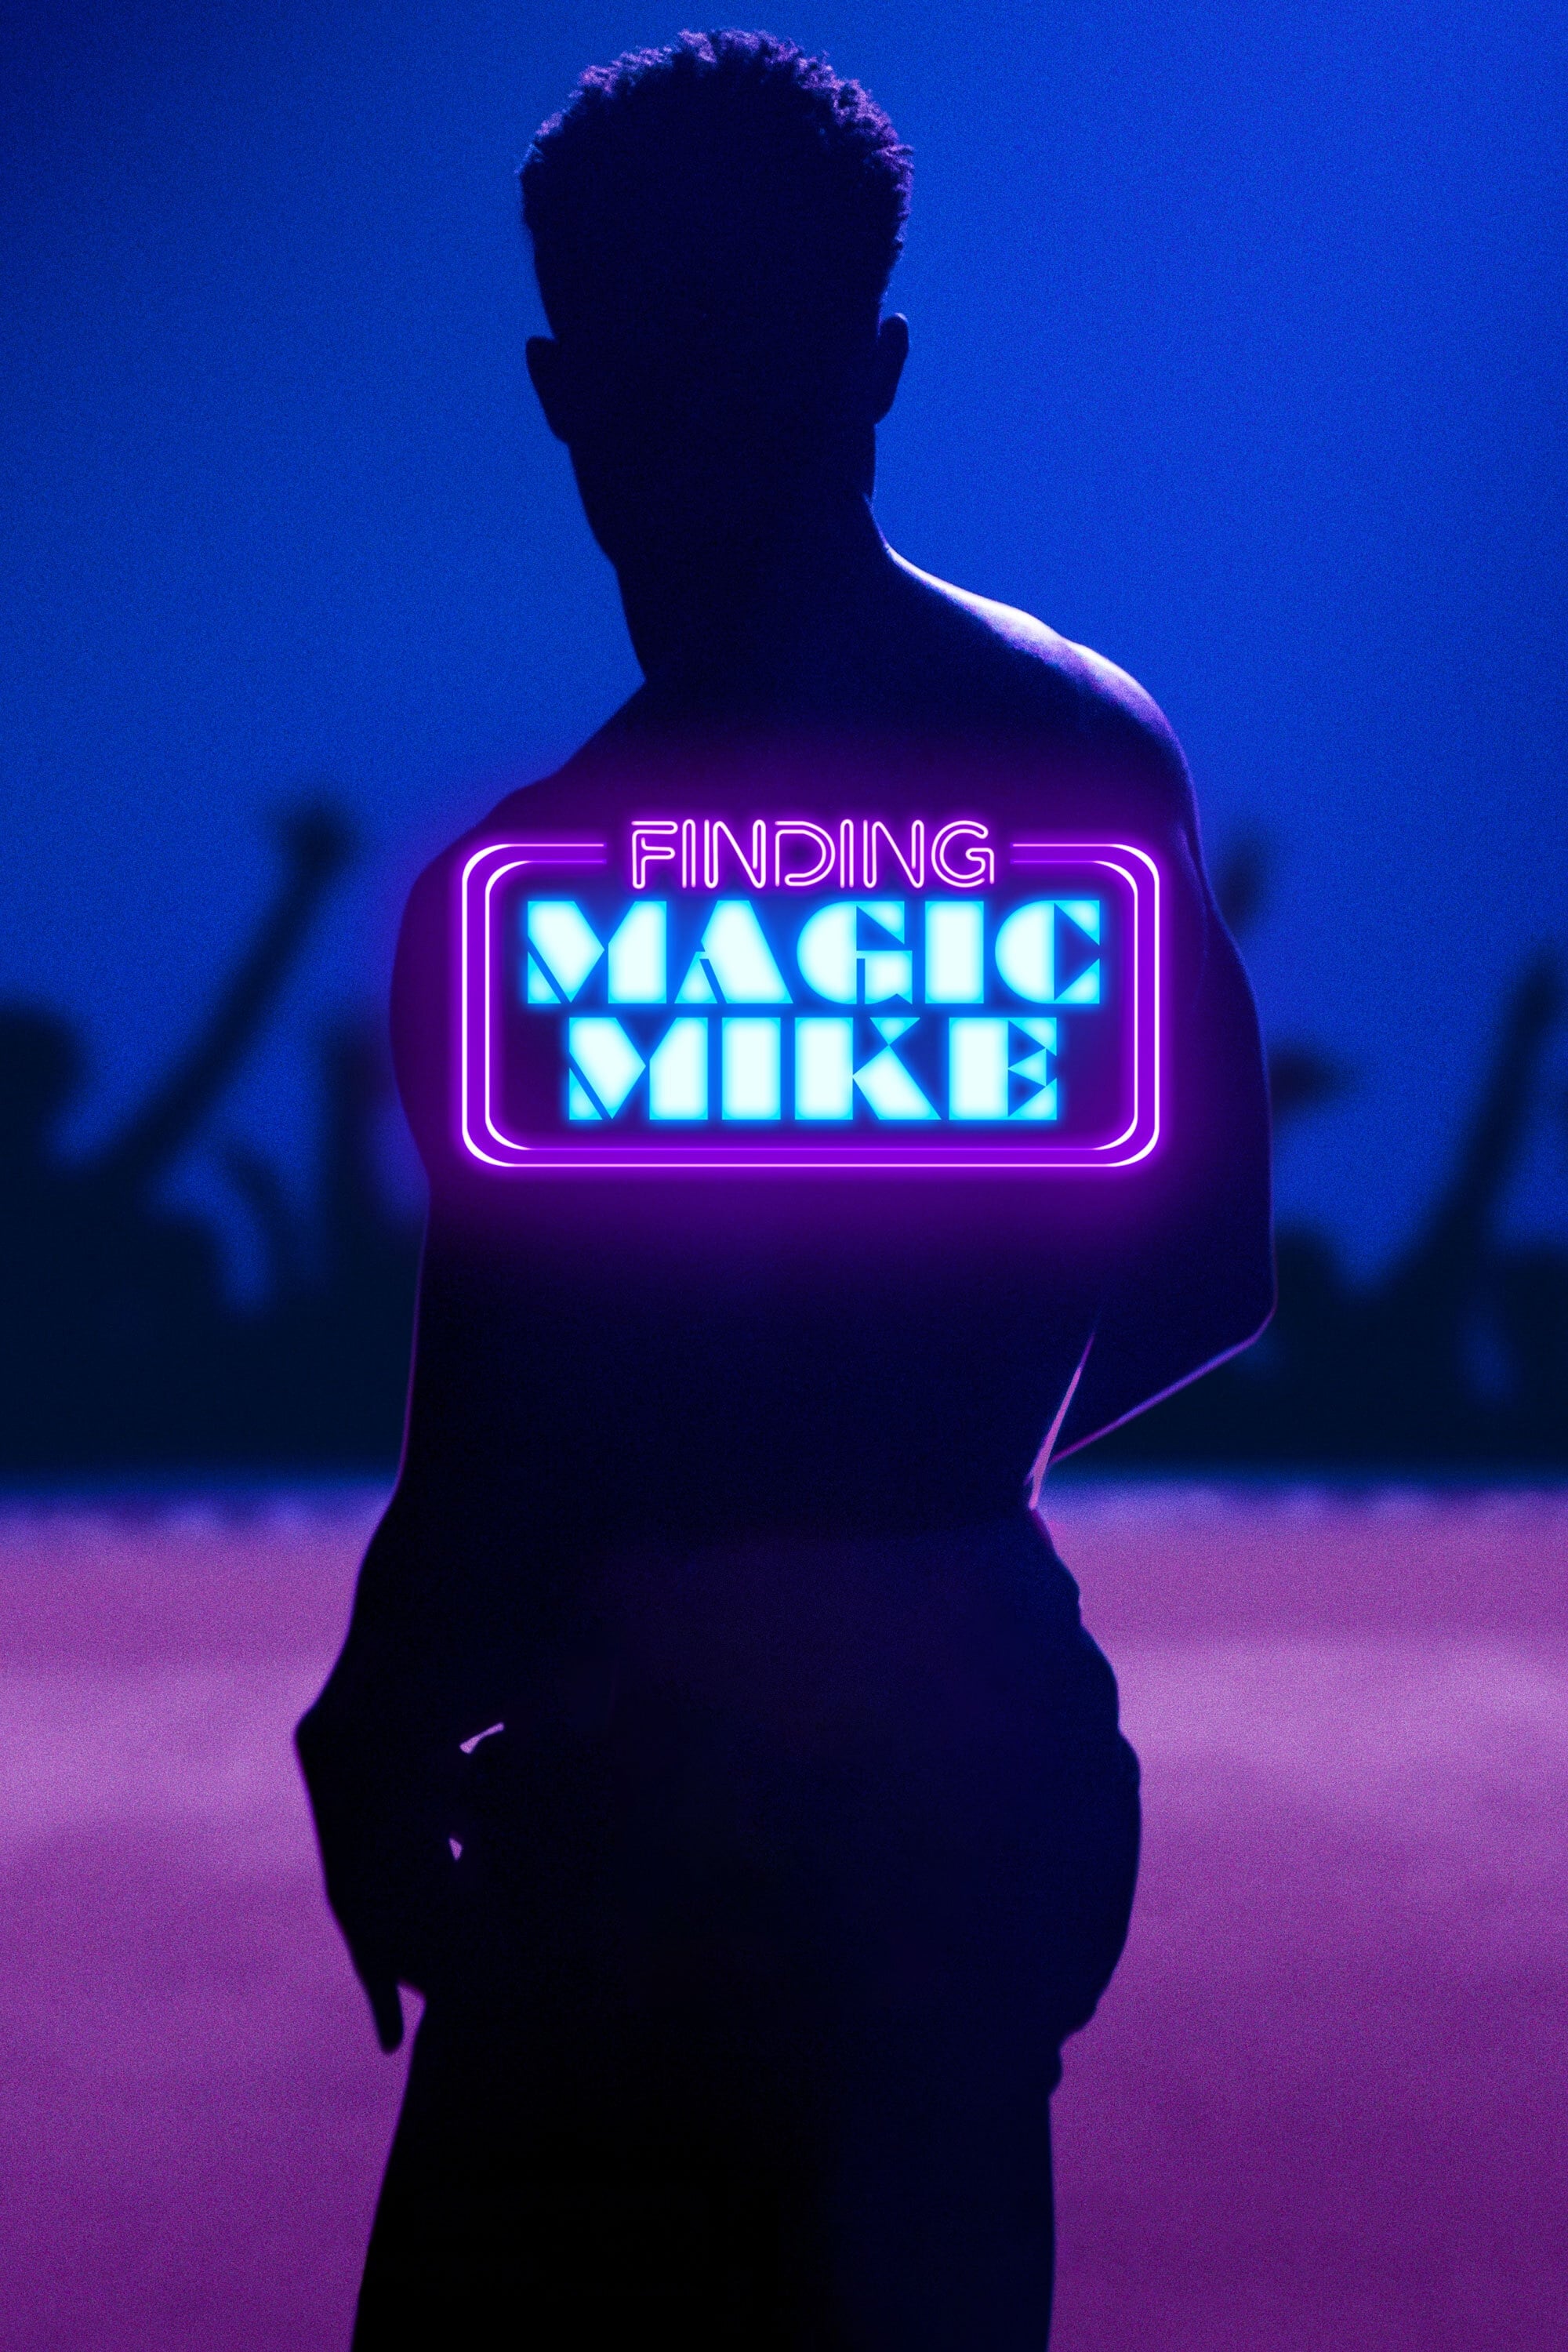 Caratula de Finding Magic Mike (Encontrando a Magic Mike) 